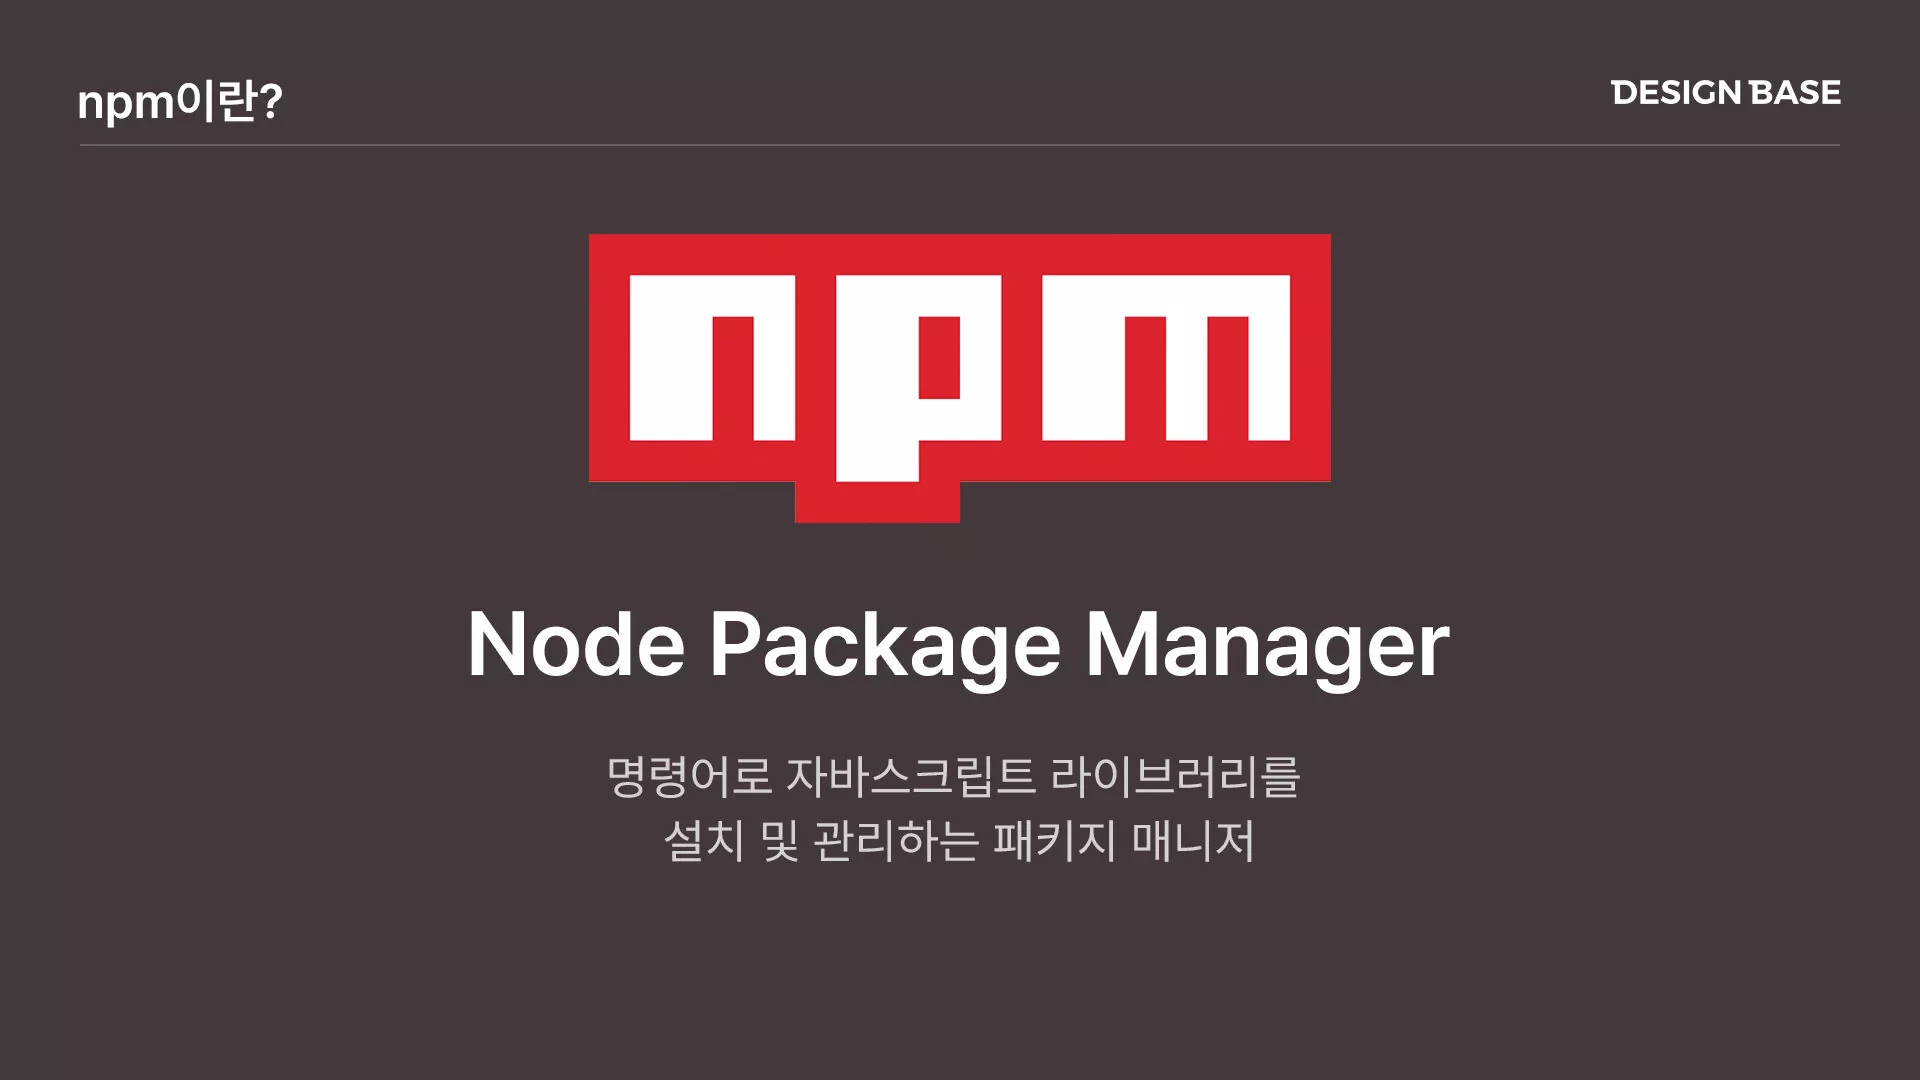 npm이란 무엇인가